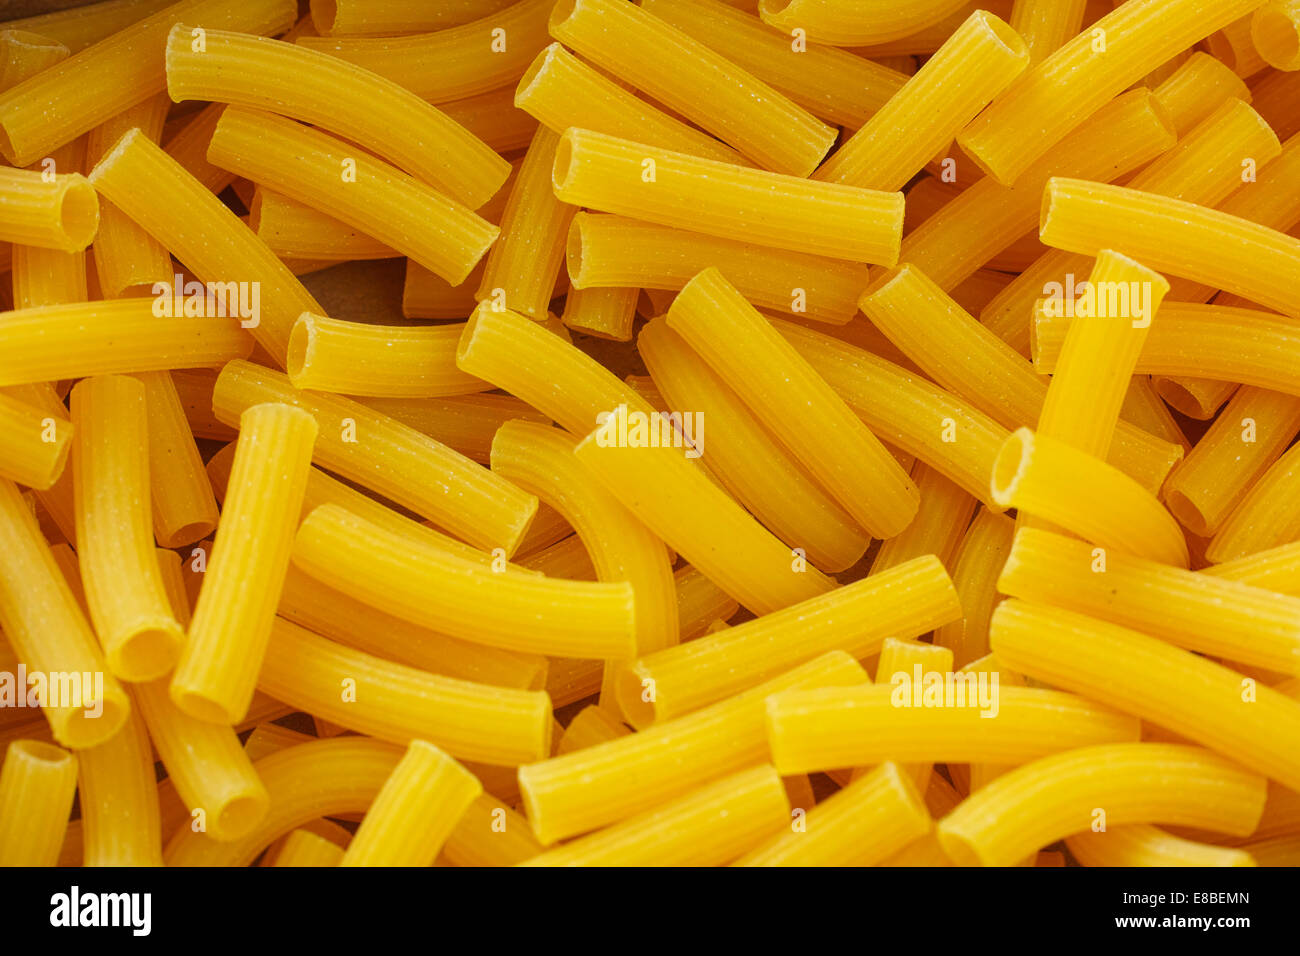 Organic Corn Pasta. Gluten Free Product. Astonishing sharpness image. Medium format color rendering and image quality. Stock Photo